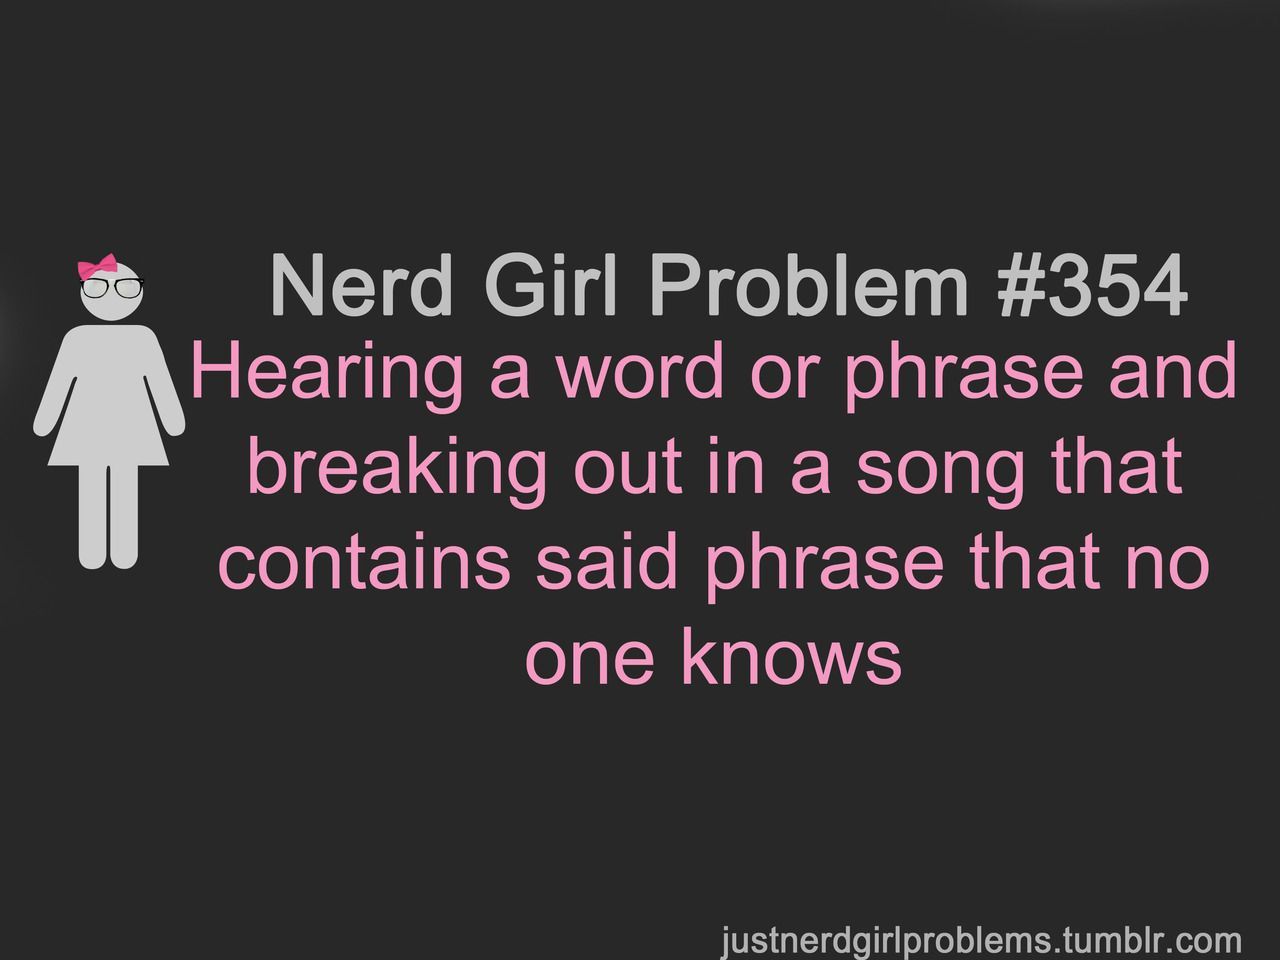 Nerd Girl Problem #354  sooo me!